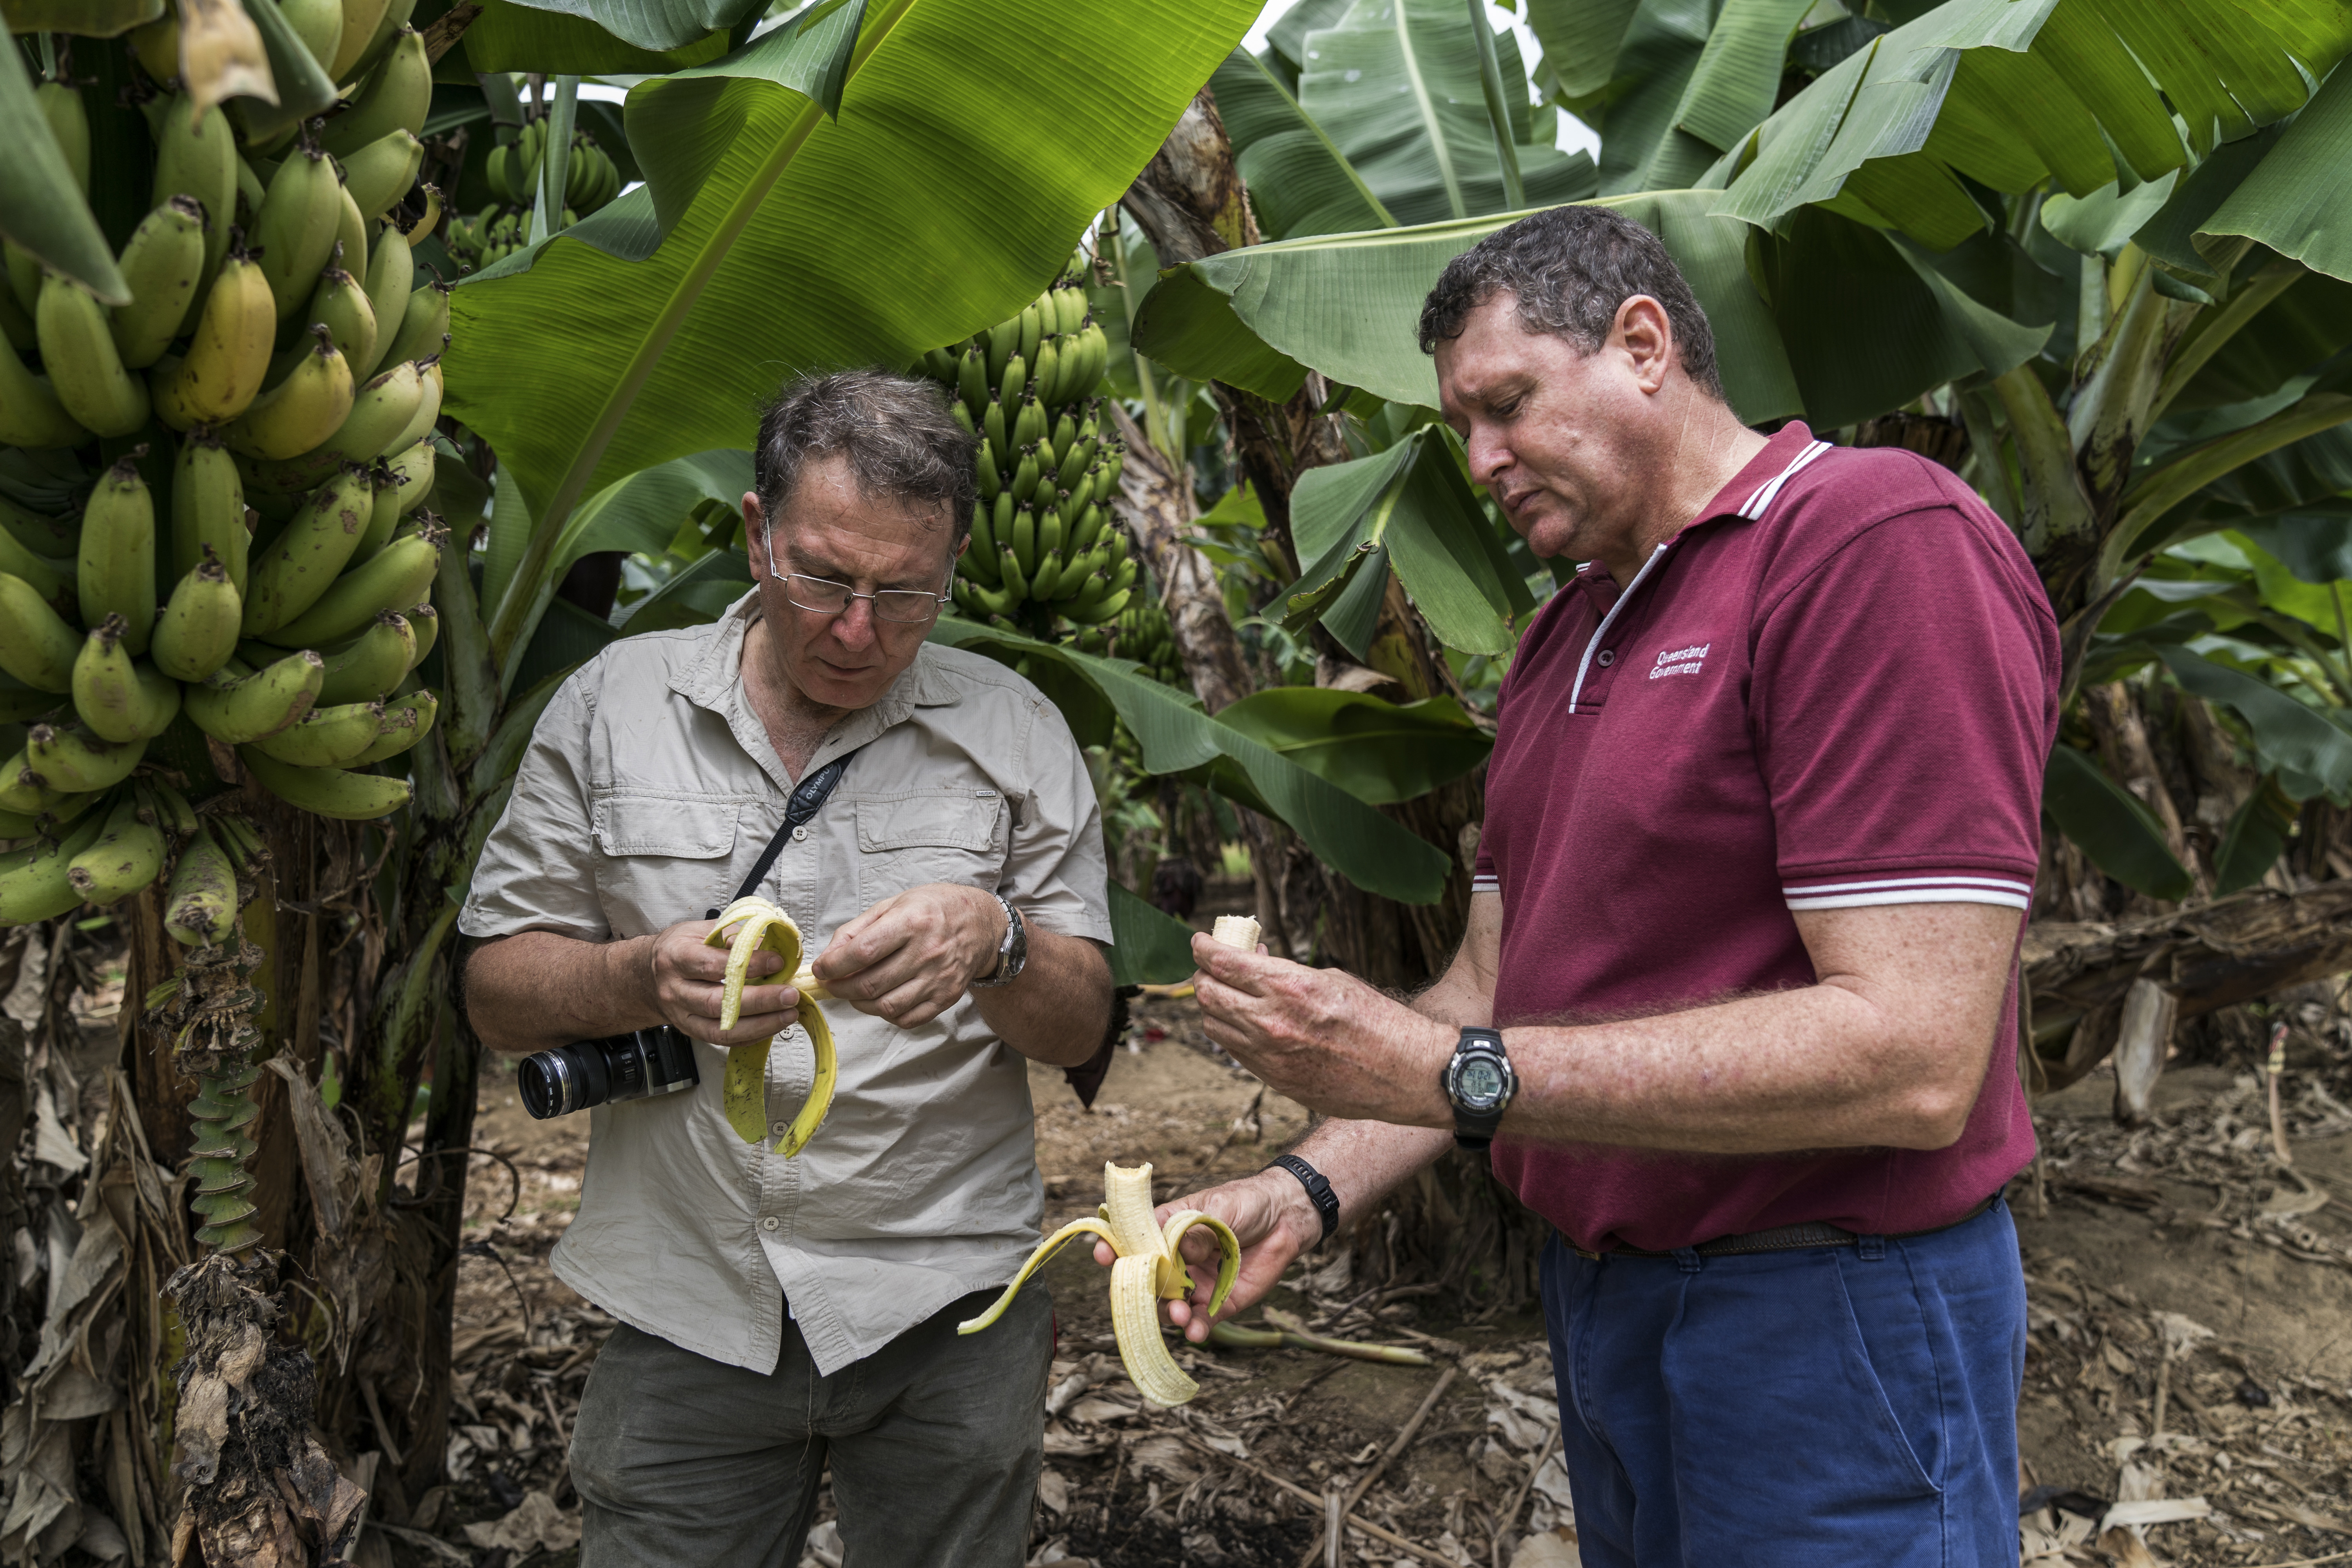 men inspecting bananas in a banana plantation